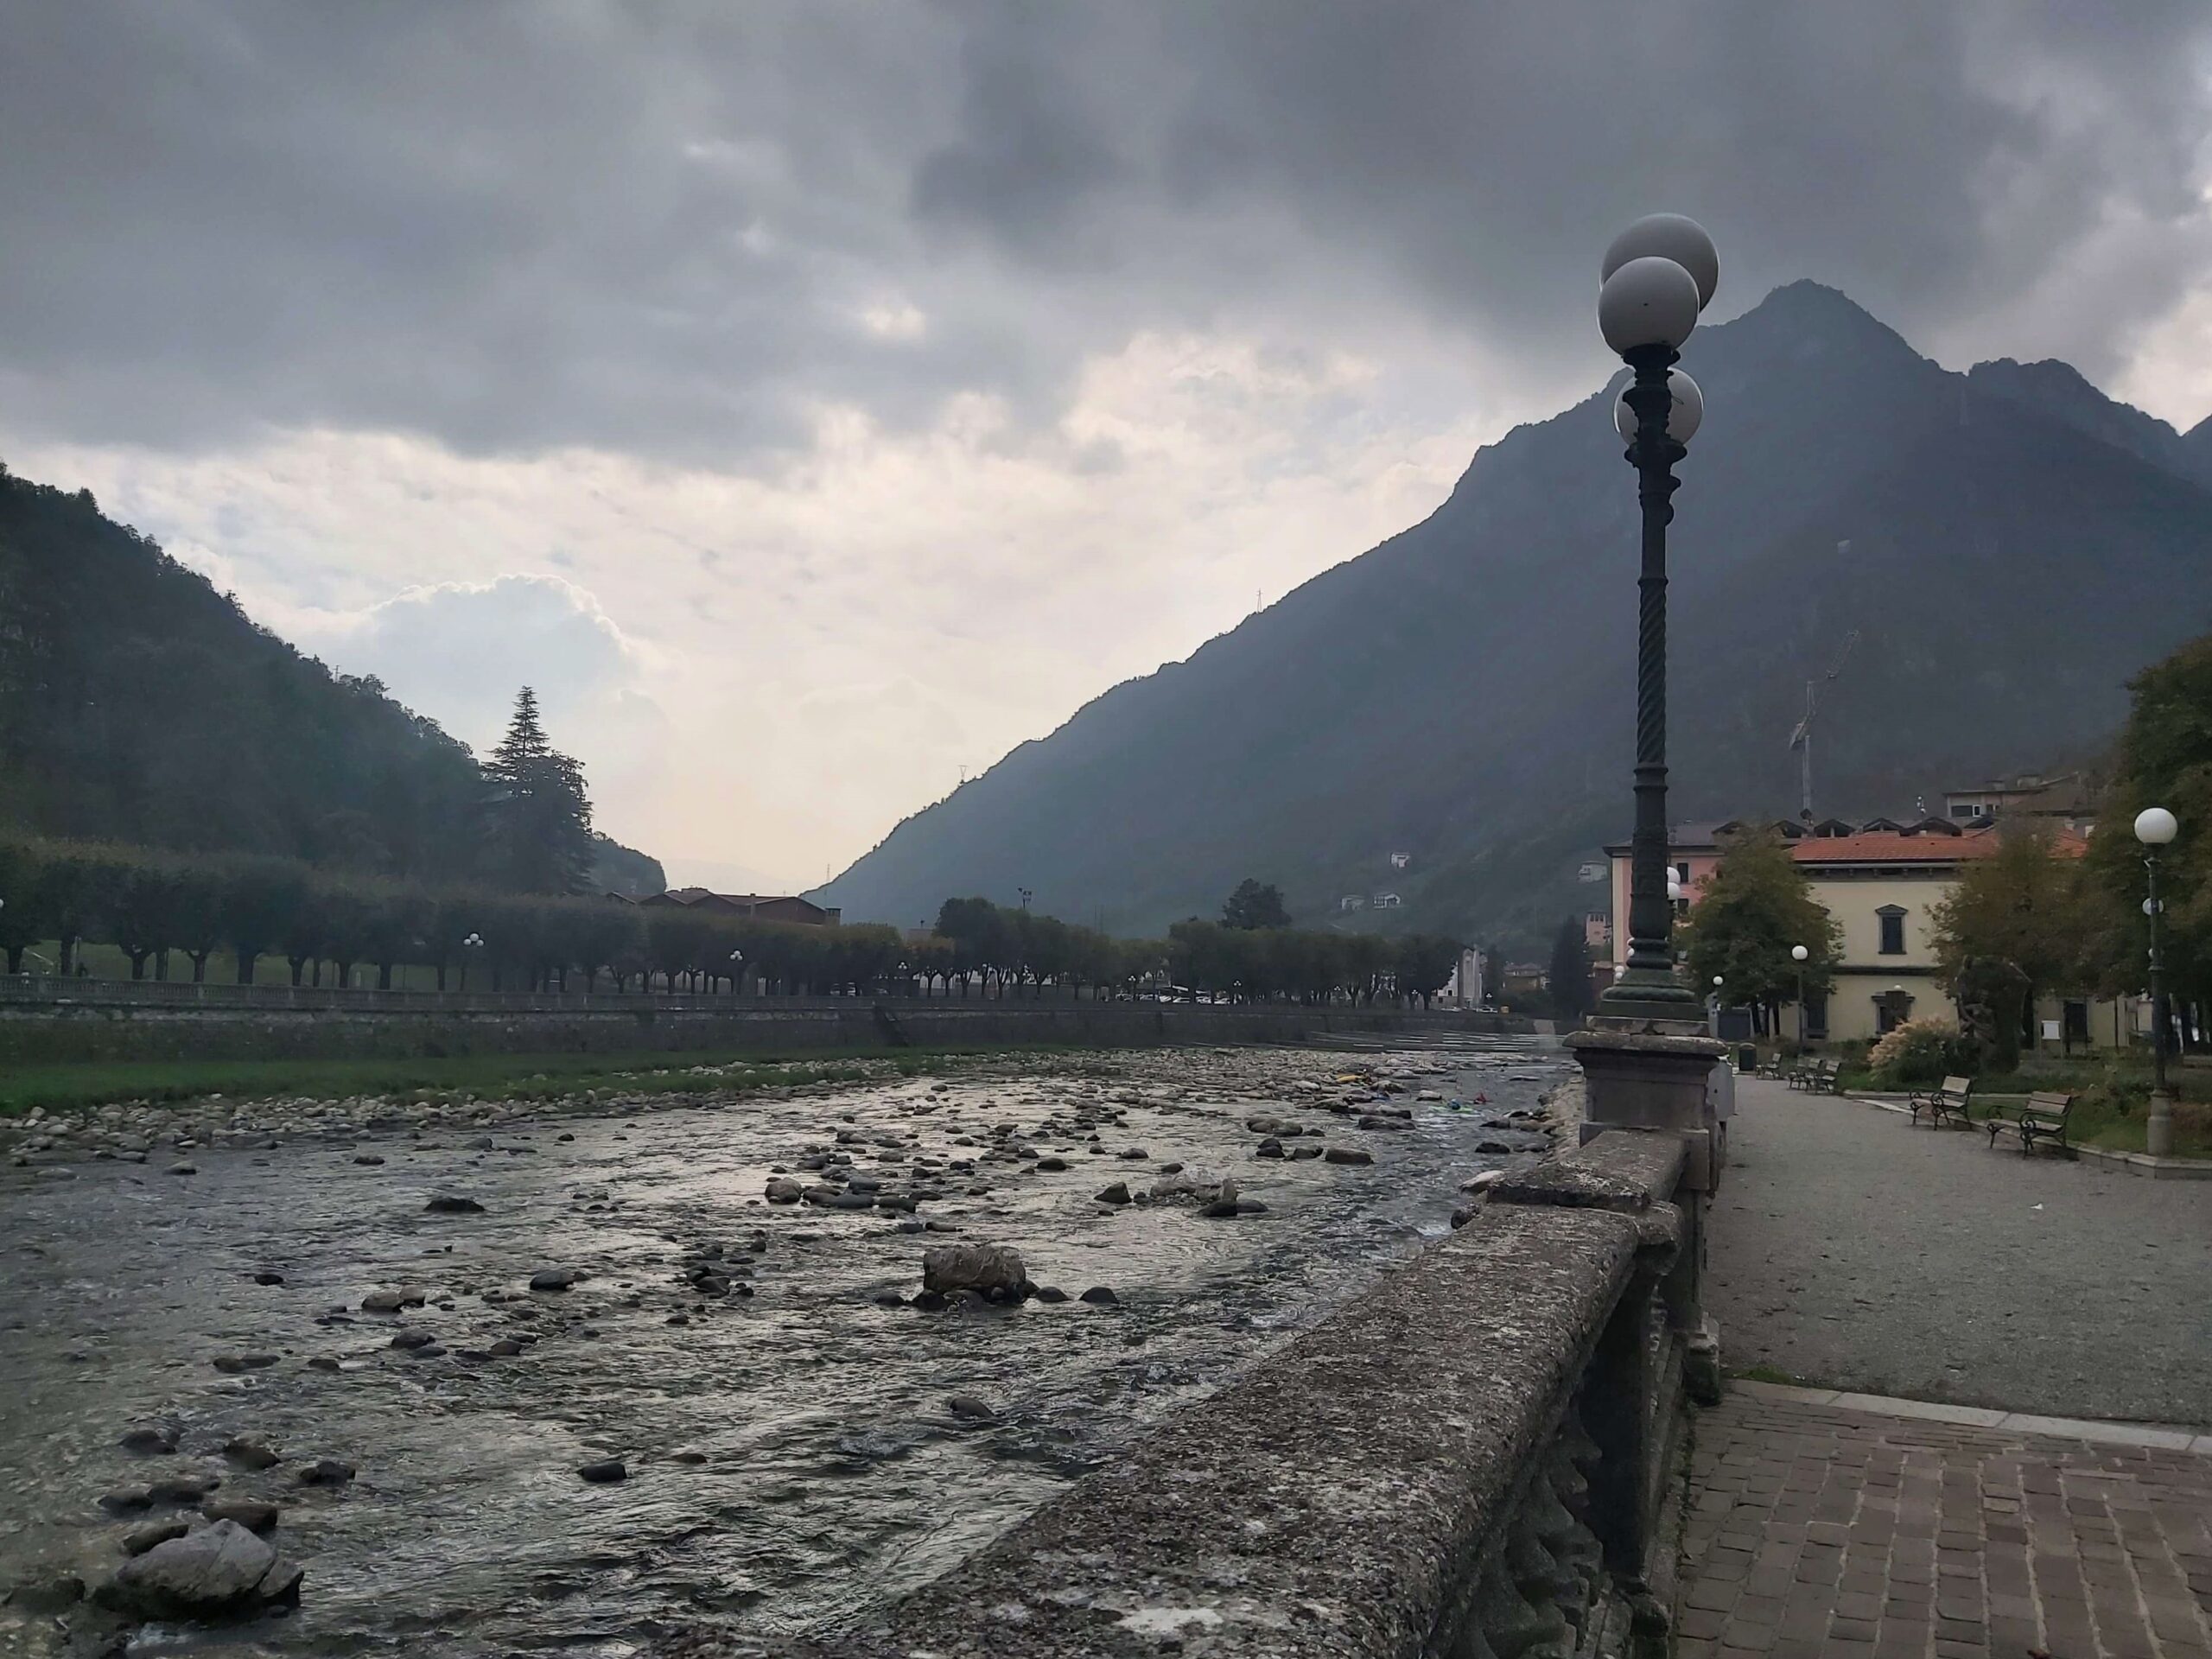 View of the River Brembo and mountains, San Pellegrino Terme, Italia